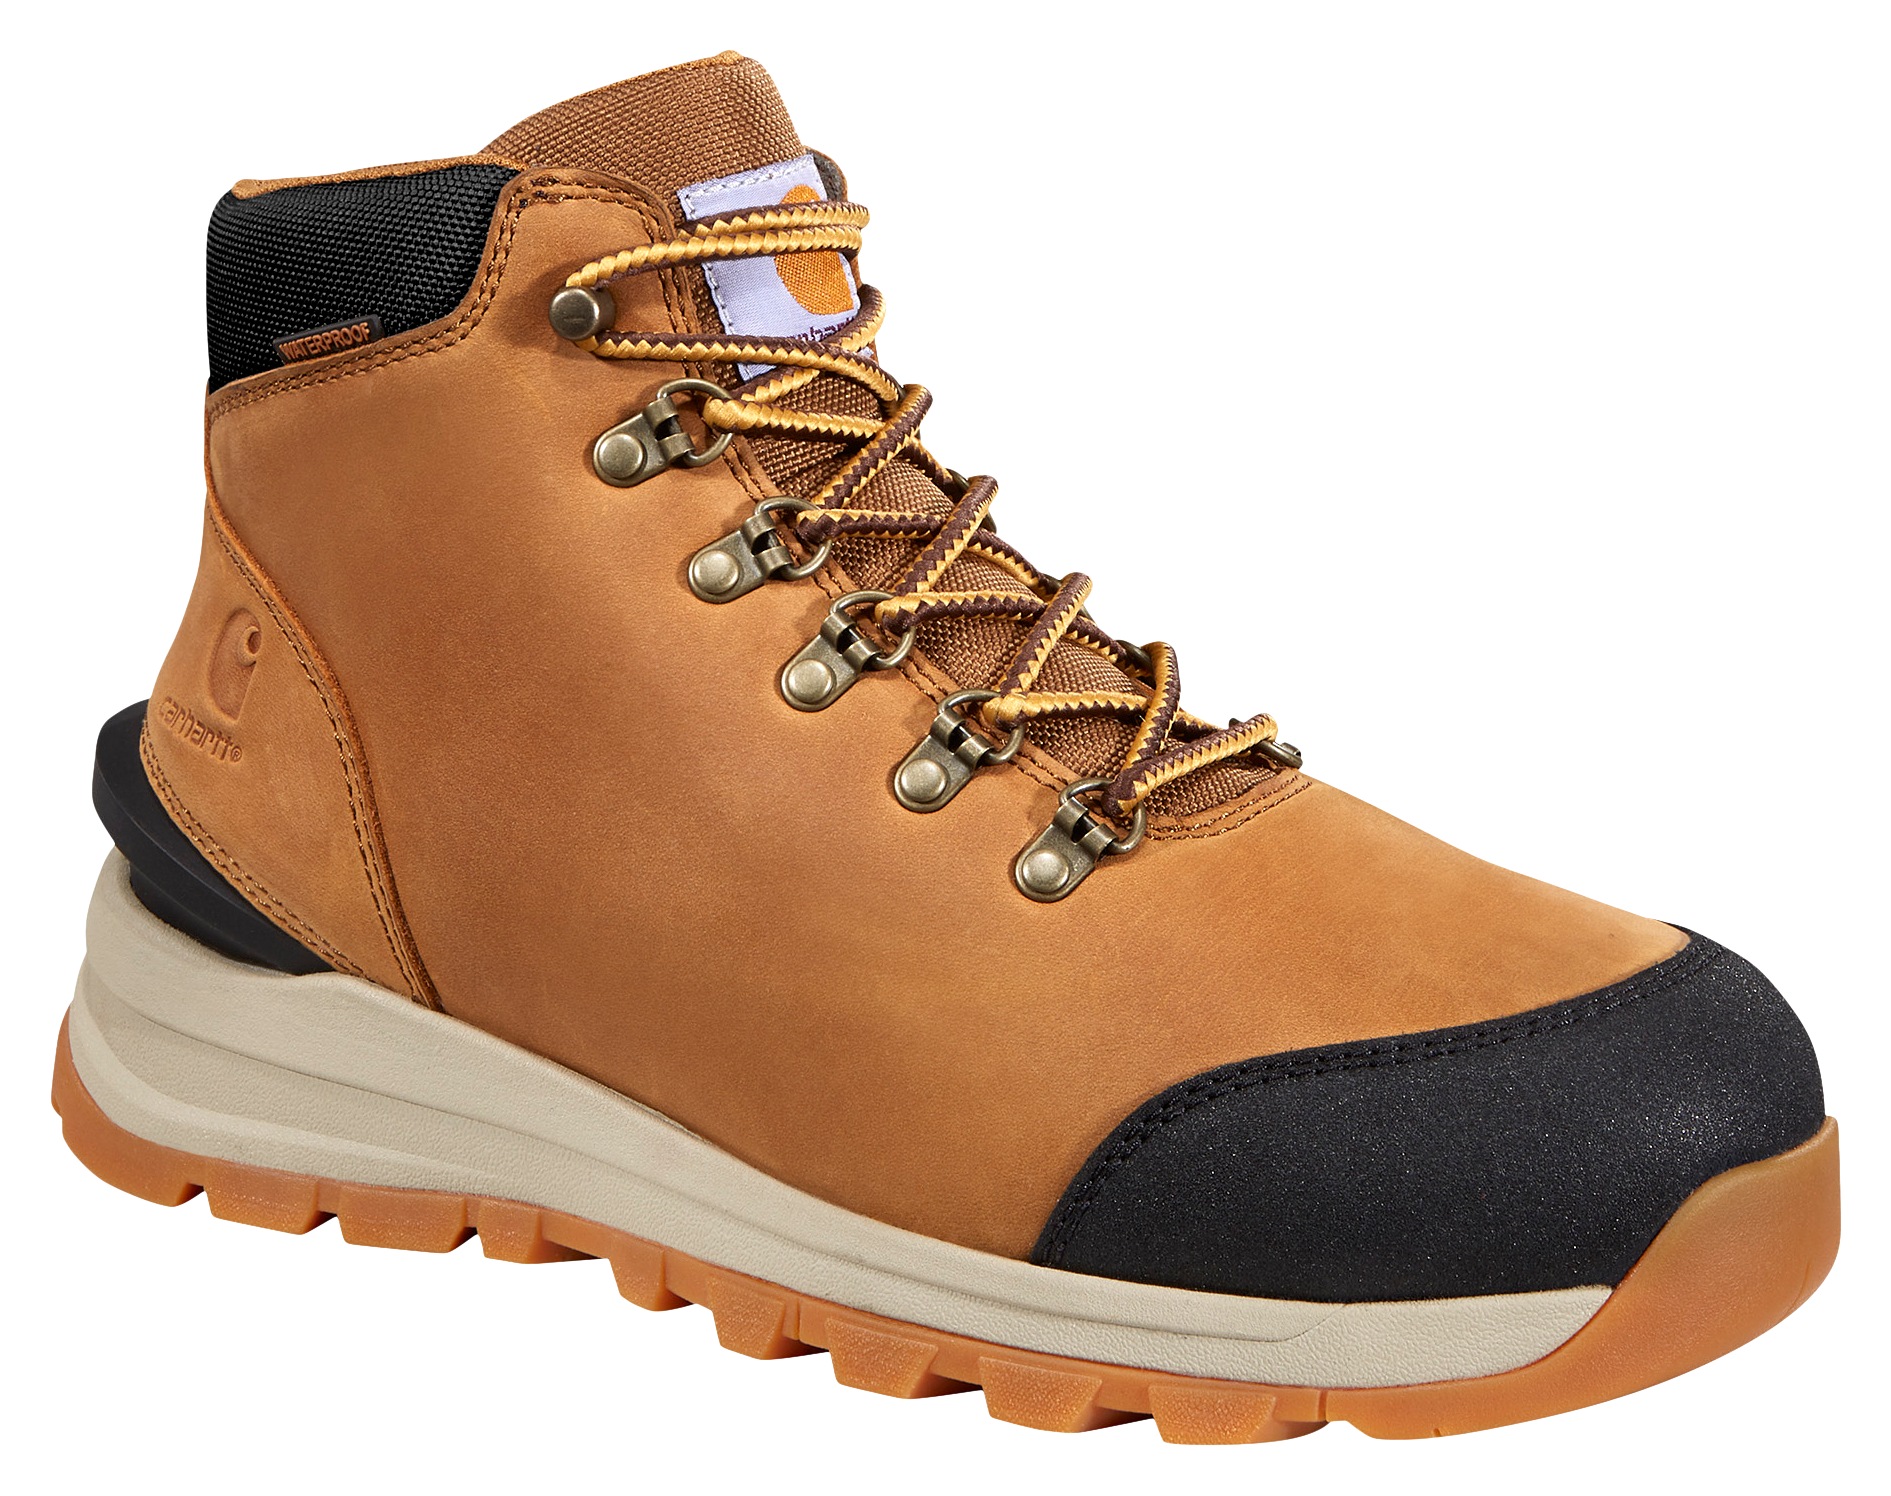 Carhartt Gilmore Waterproof Hiking Boots for Men - Brown - 10.5W